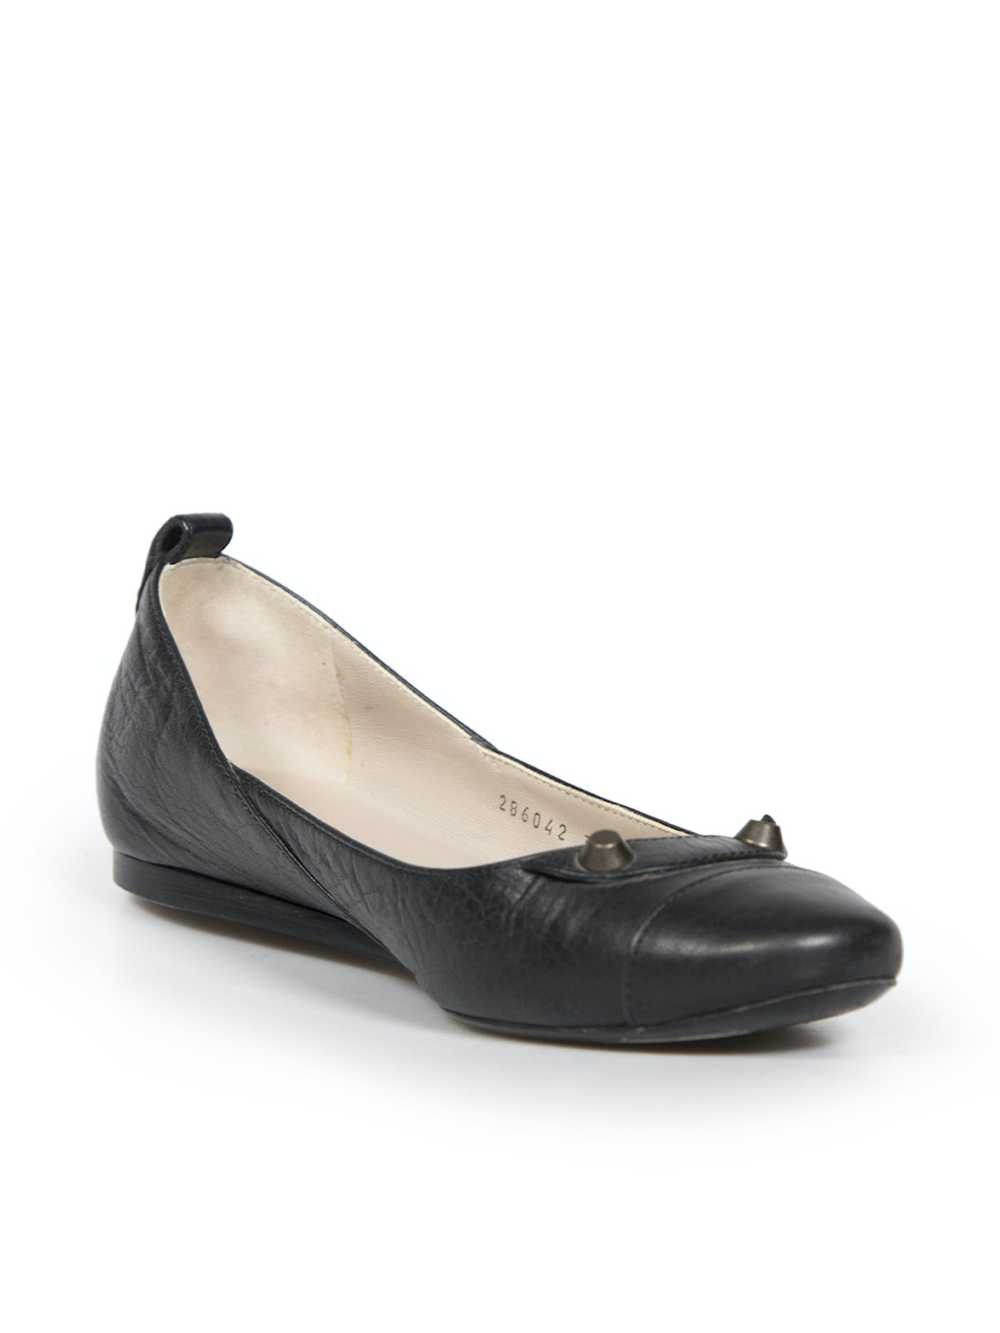 Balenciaga Black Leather Stud Detail Ballet Flats - image 2